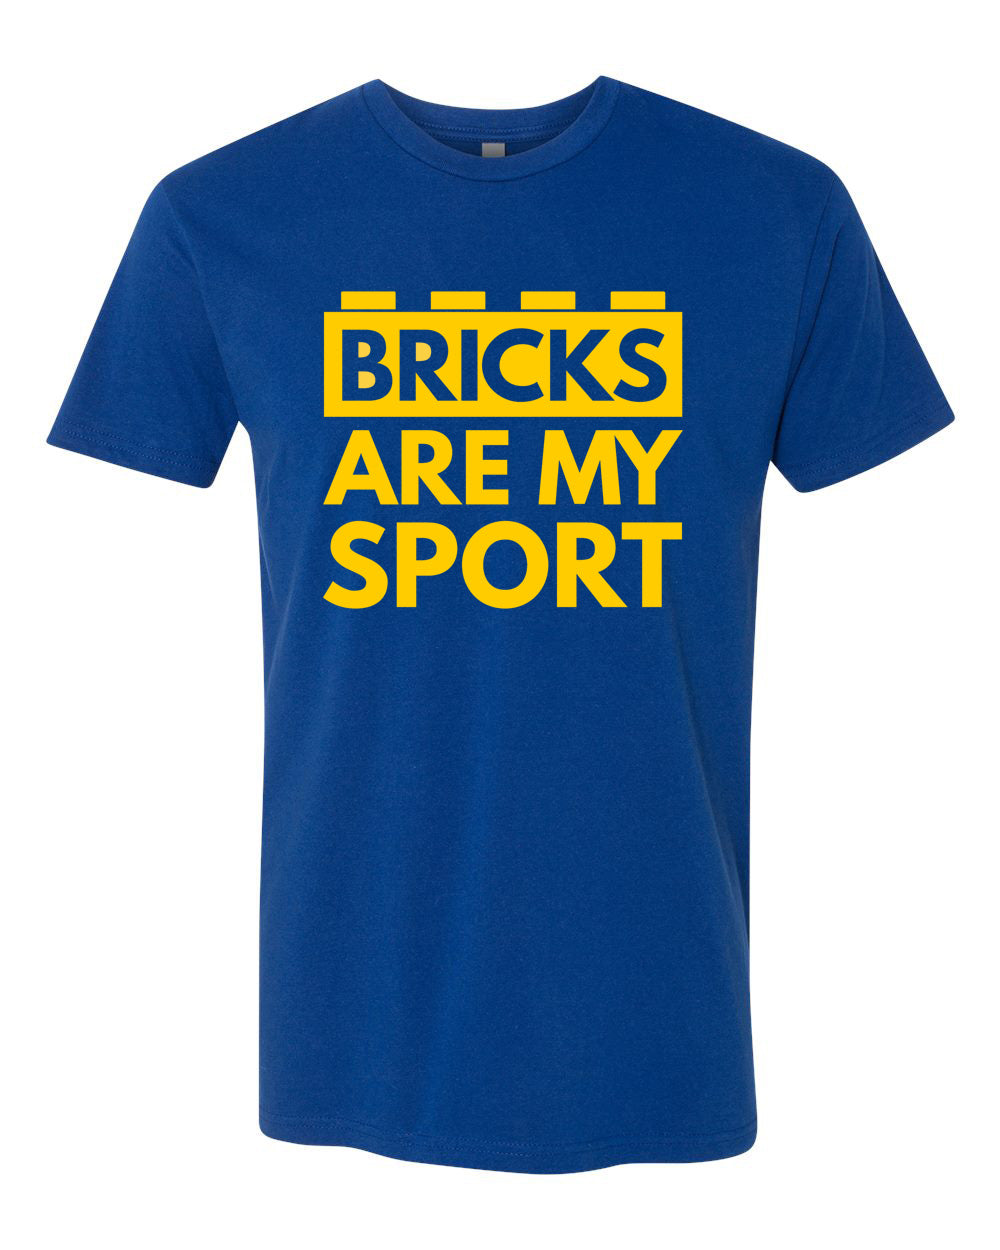 Royal Blue Short Sleeve T-Shirt (Beyond The Brick)